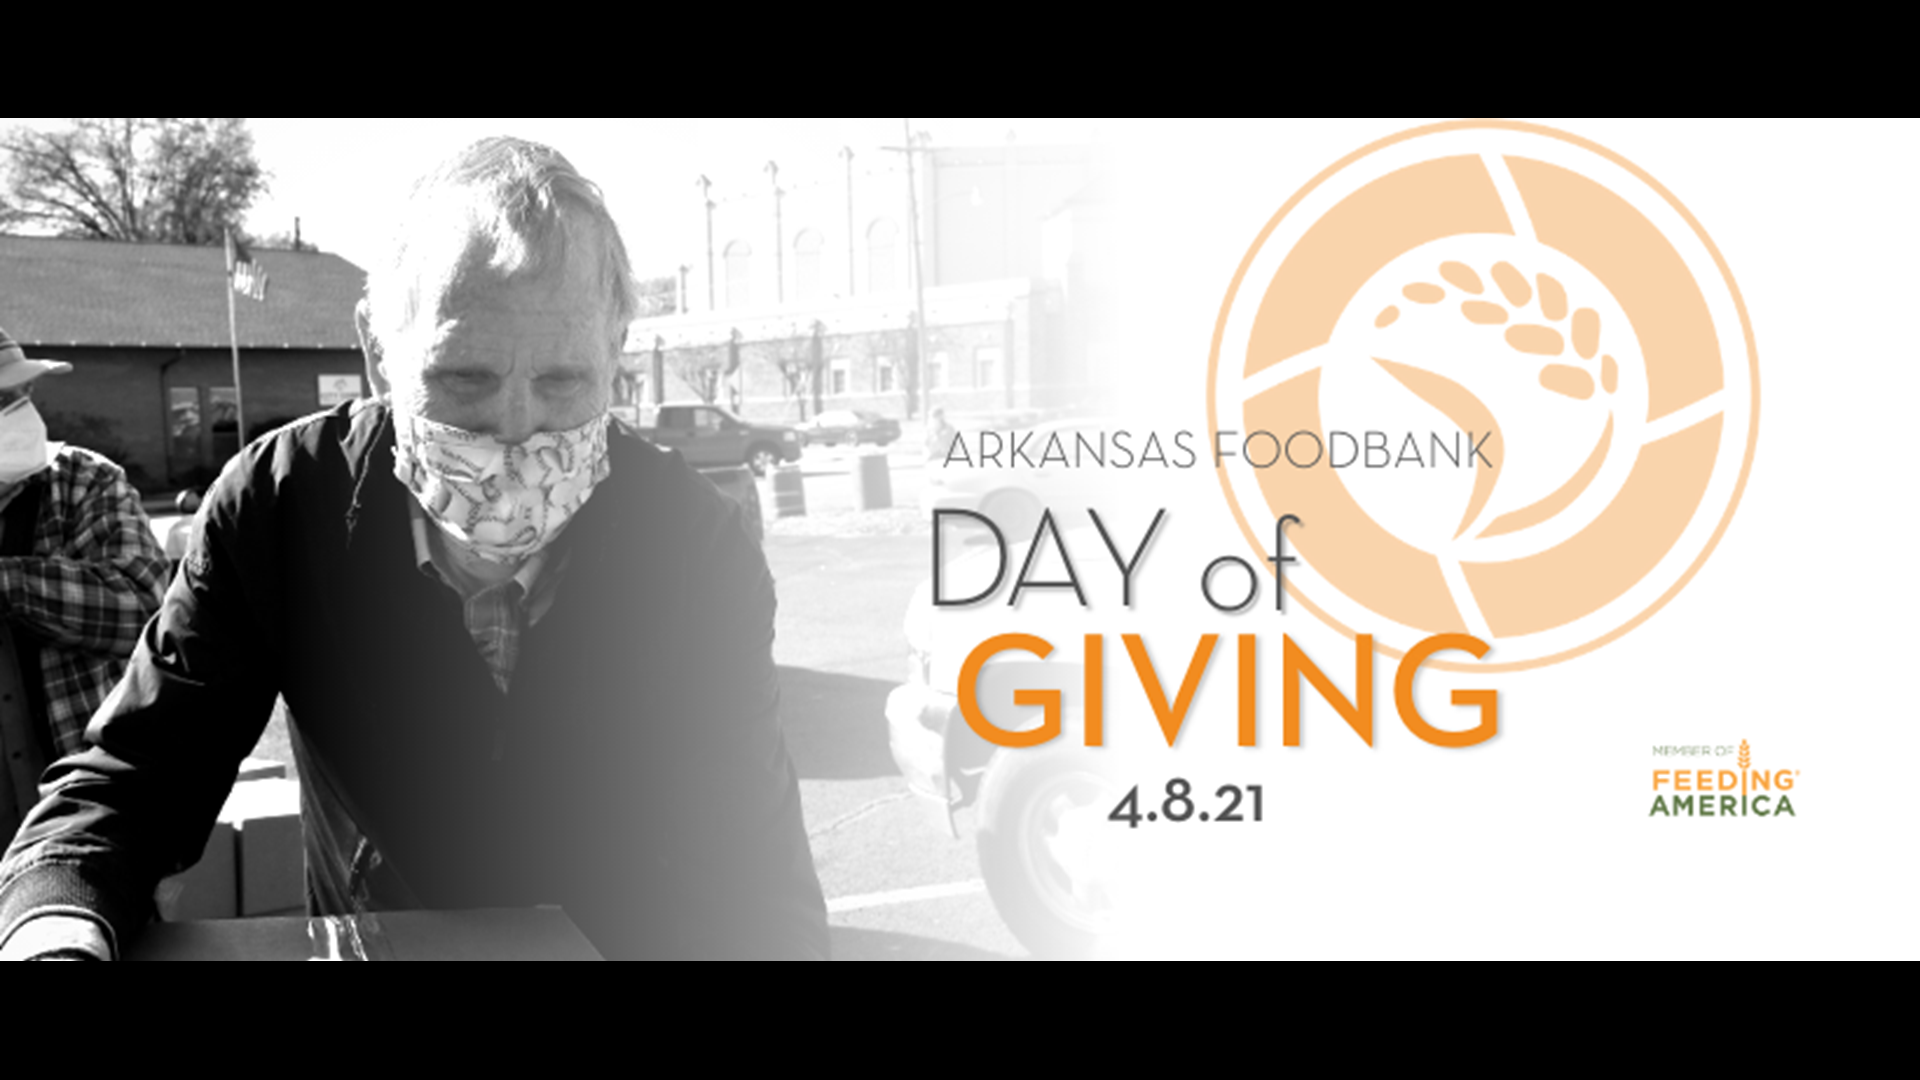 CEO of Arkansas Foodbank Rhonda Sanders tells us about Arkansas Foodbank’s Day of Giving. To donate, visit arkansasfoodbank.org.